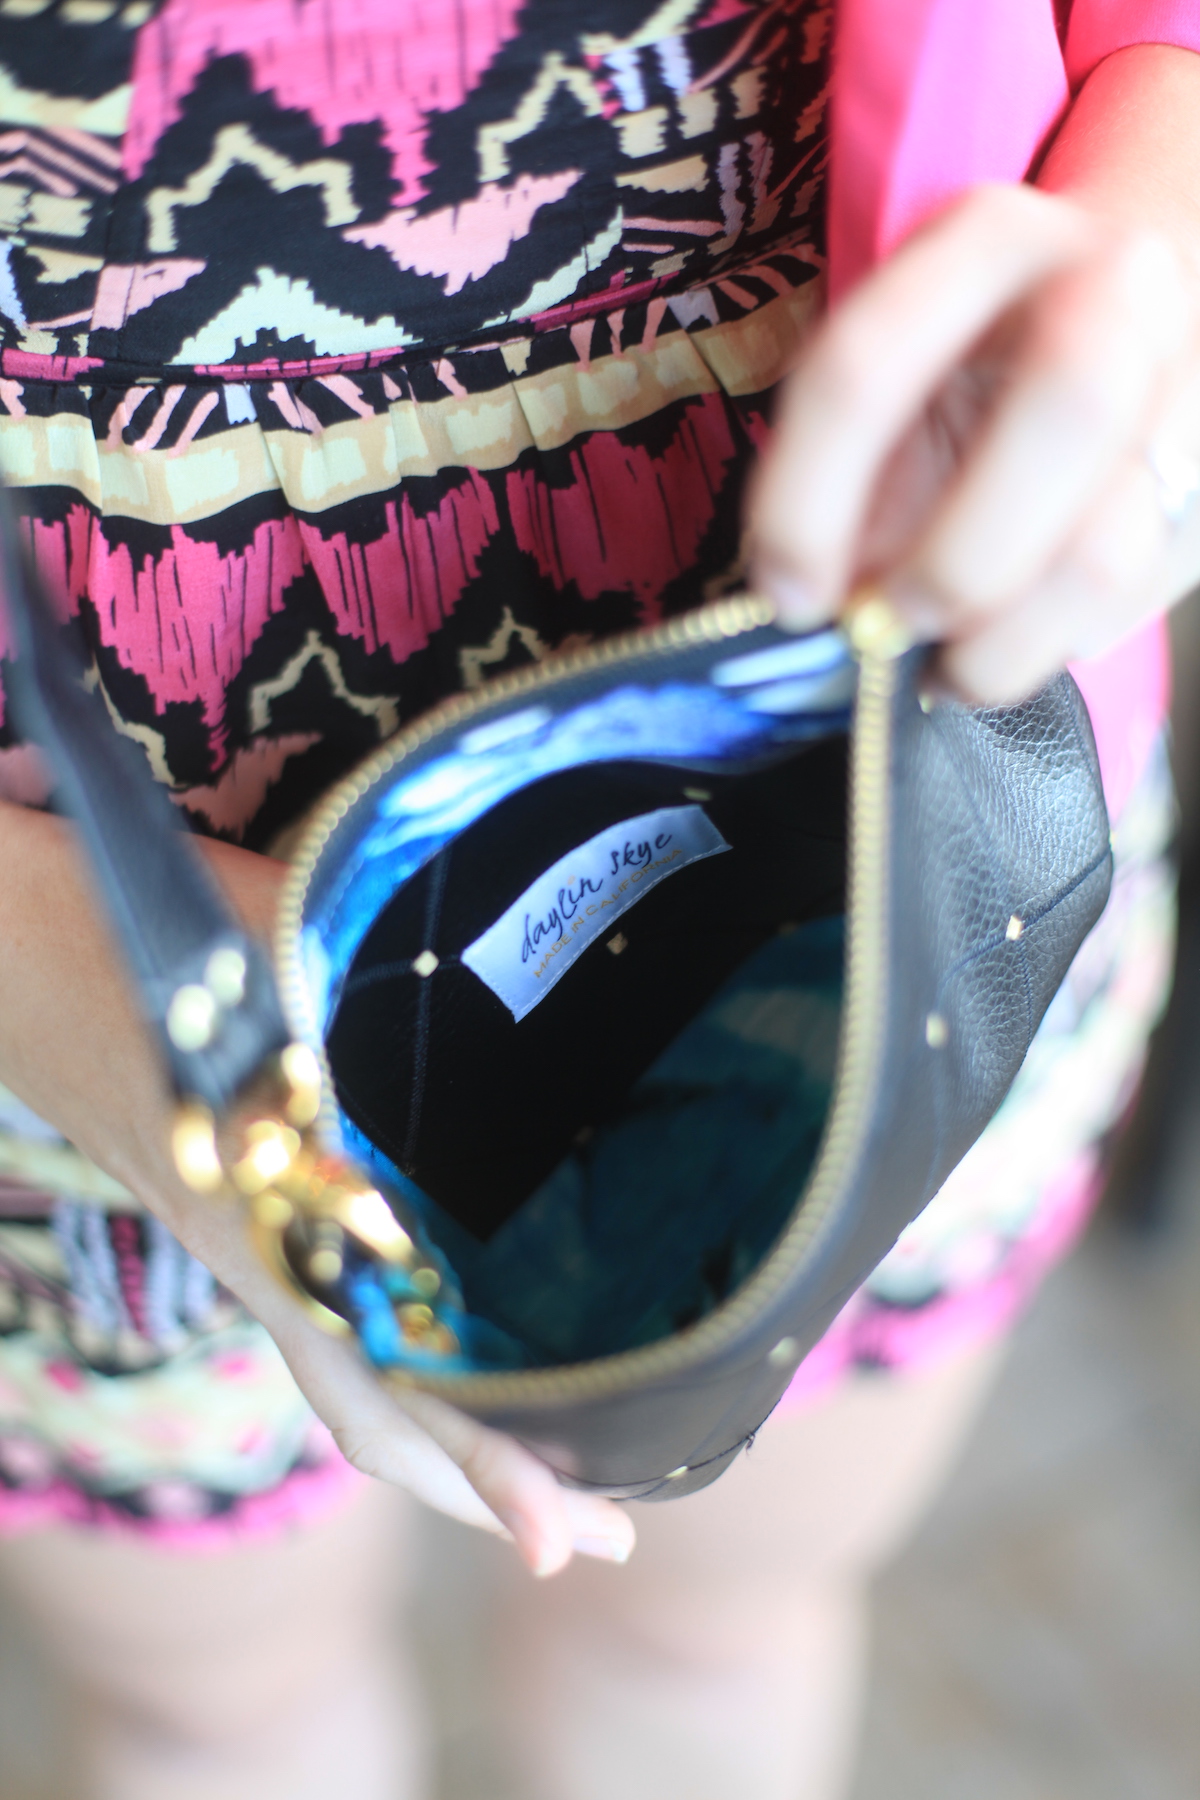 One Look + One Life Lesson // Daylin Skye Handbag, Pink Blazer, Aztec Romper Styled by Allyn Lewis